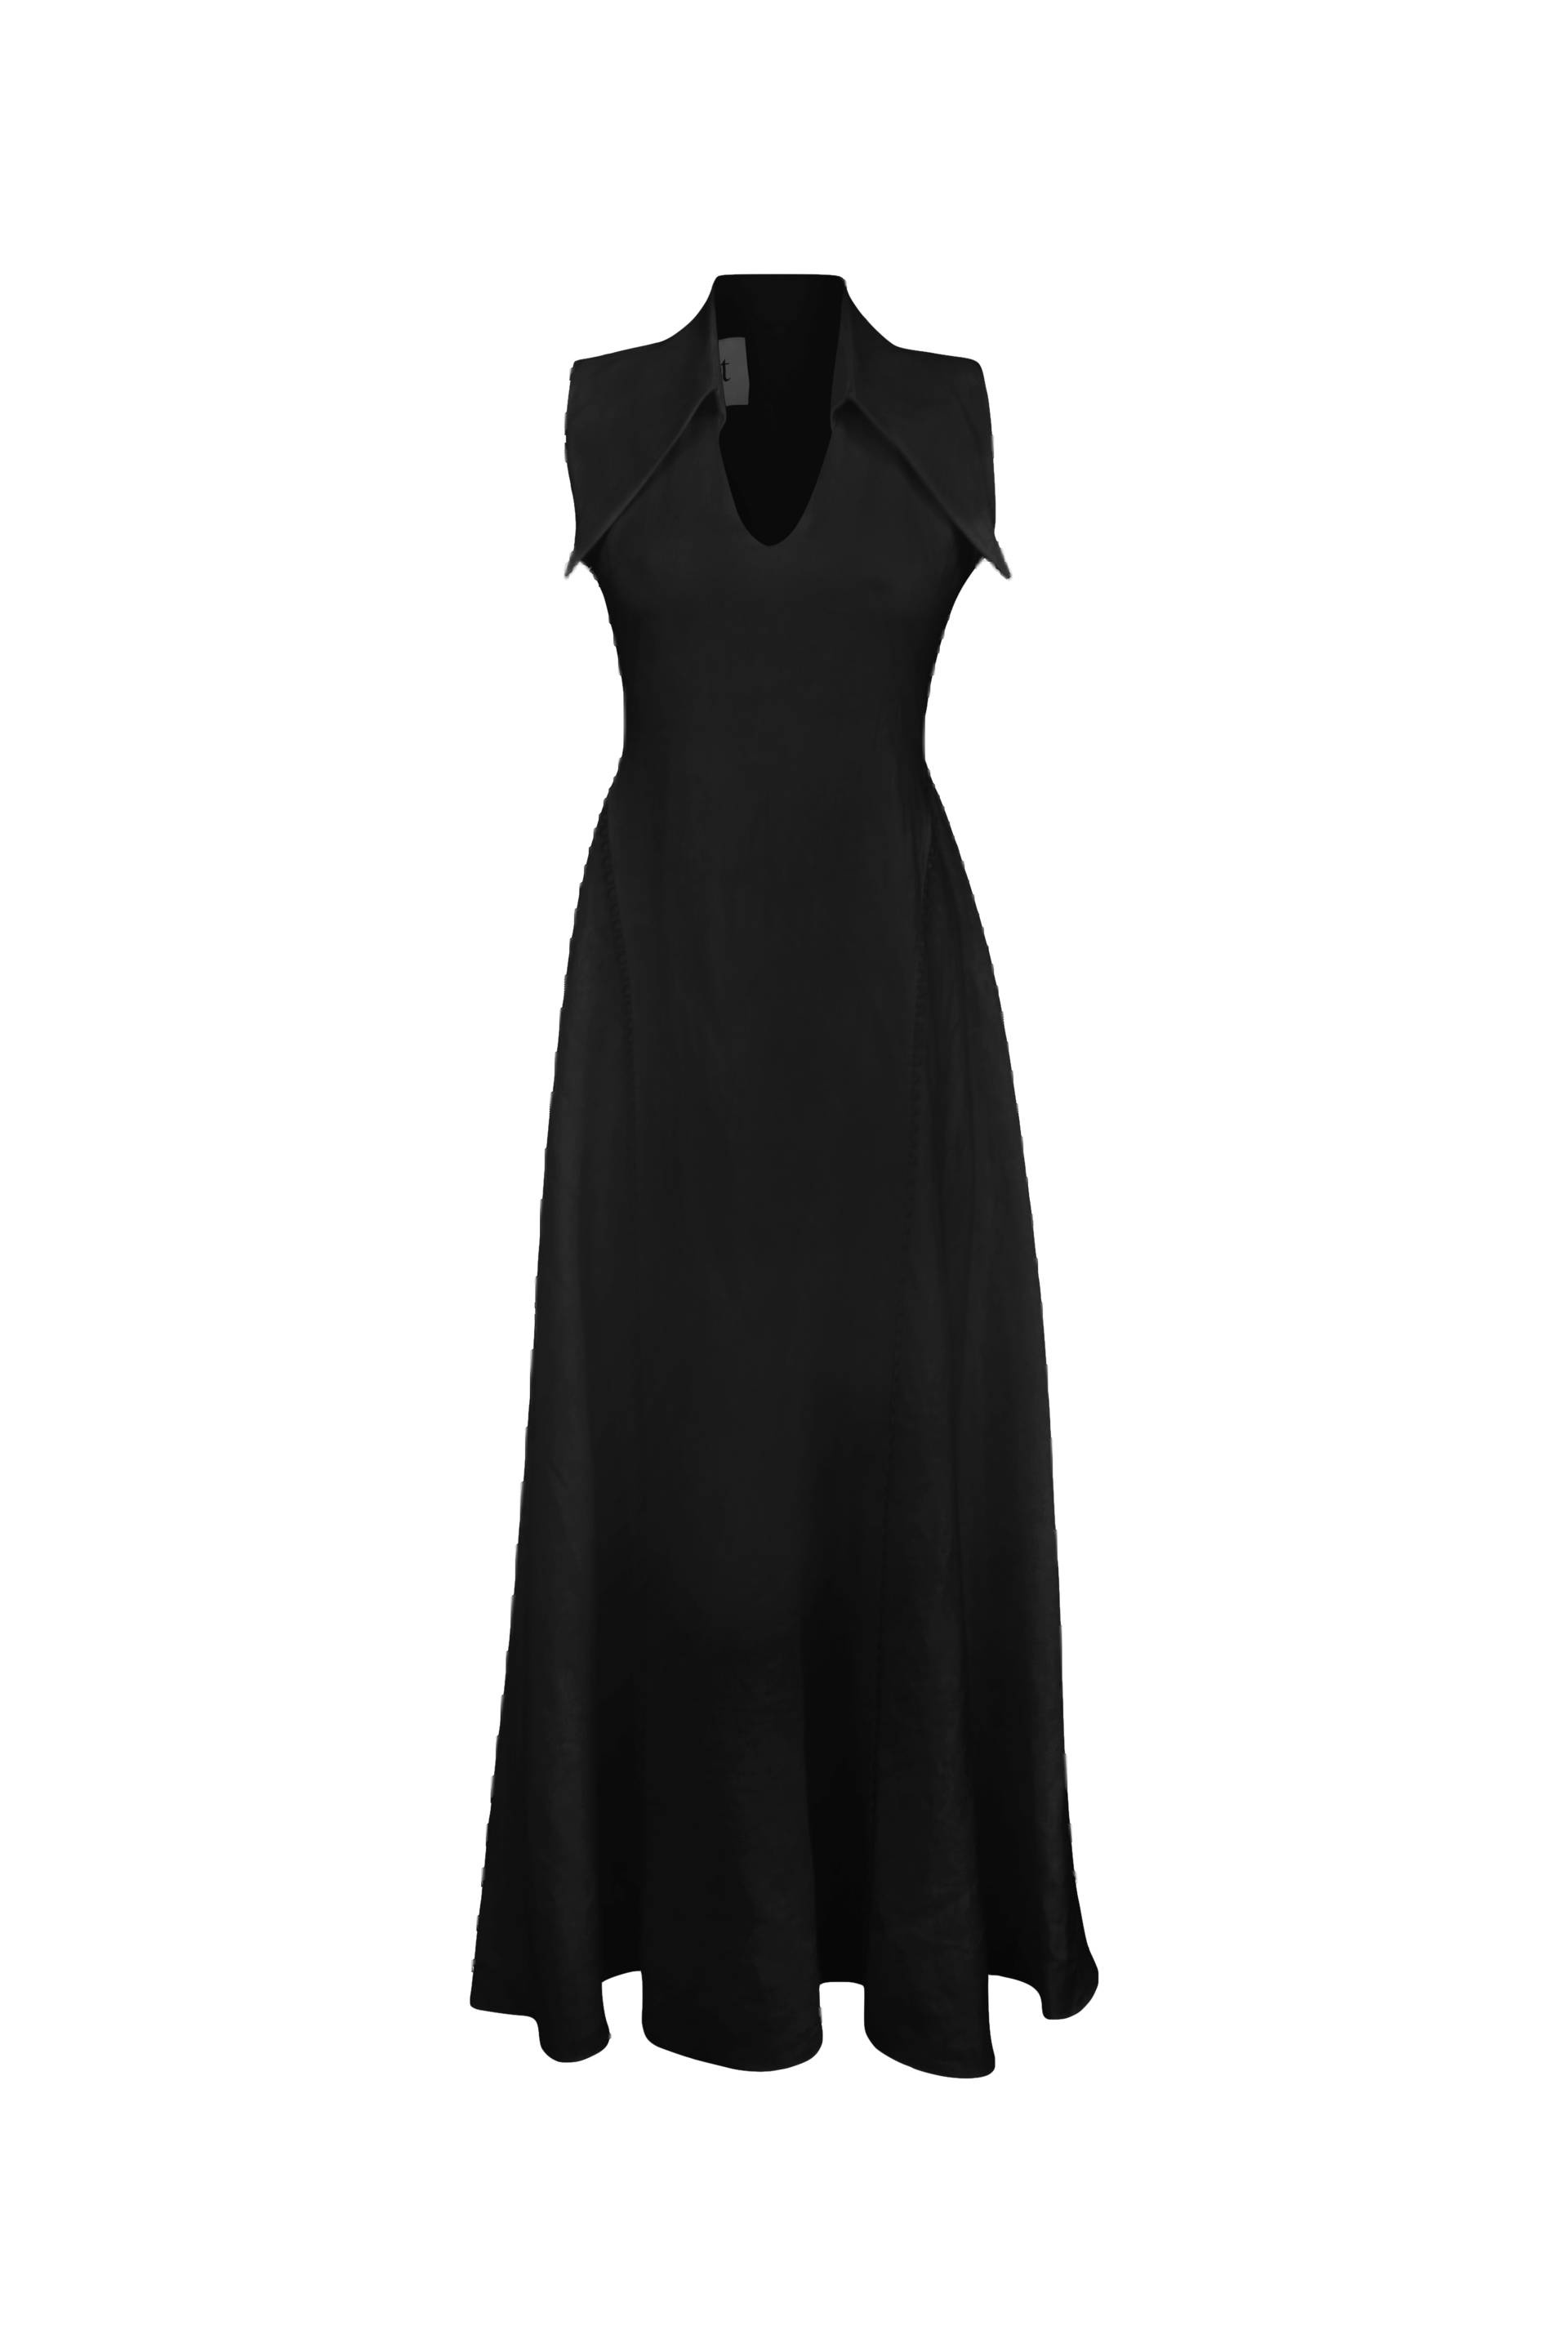 AMARI Sleeveless Maxi Black Linen Dress von MAET